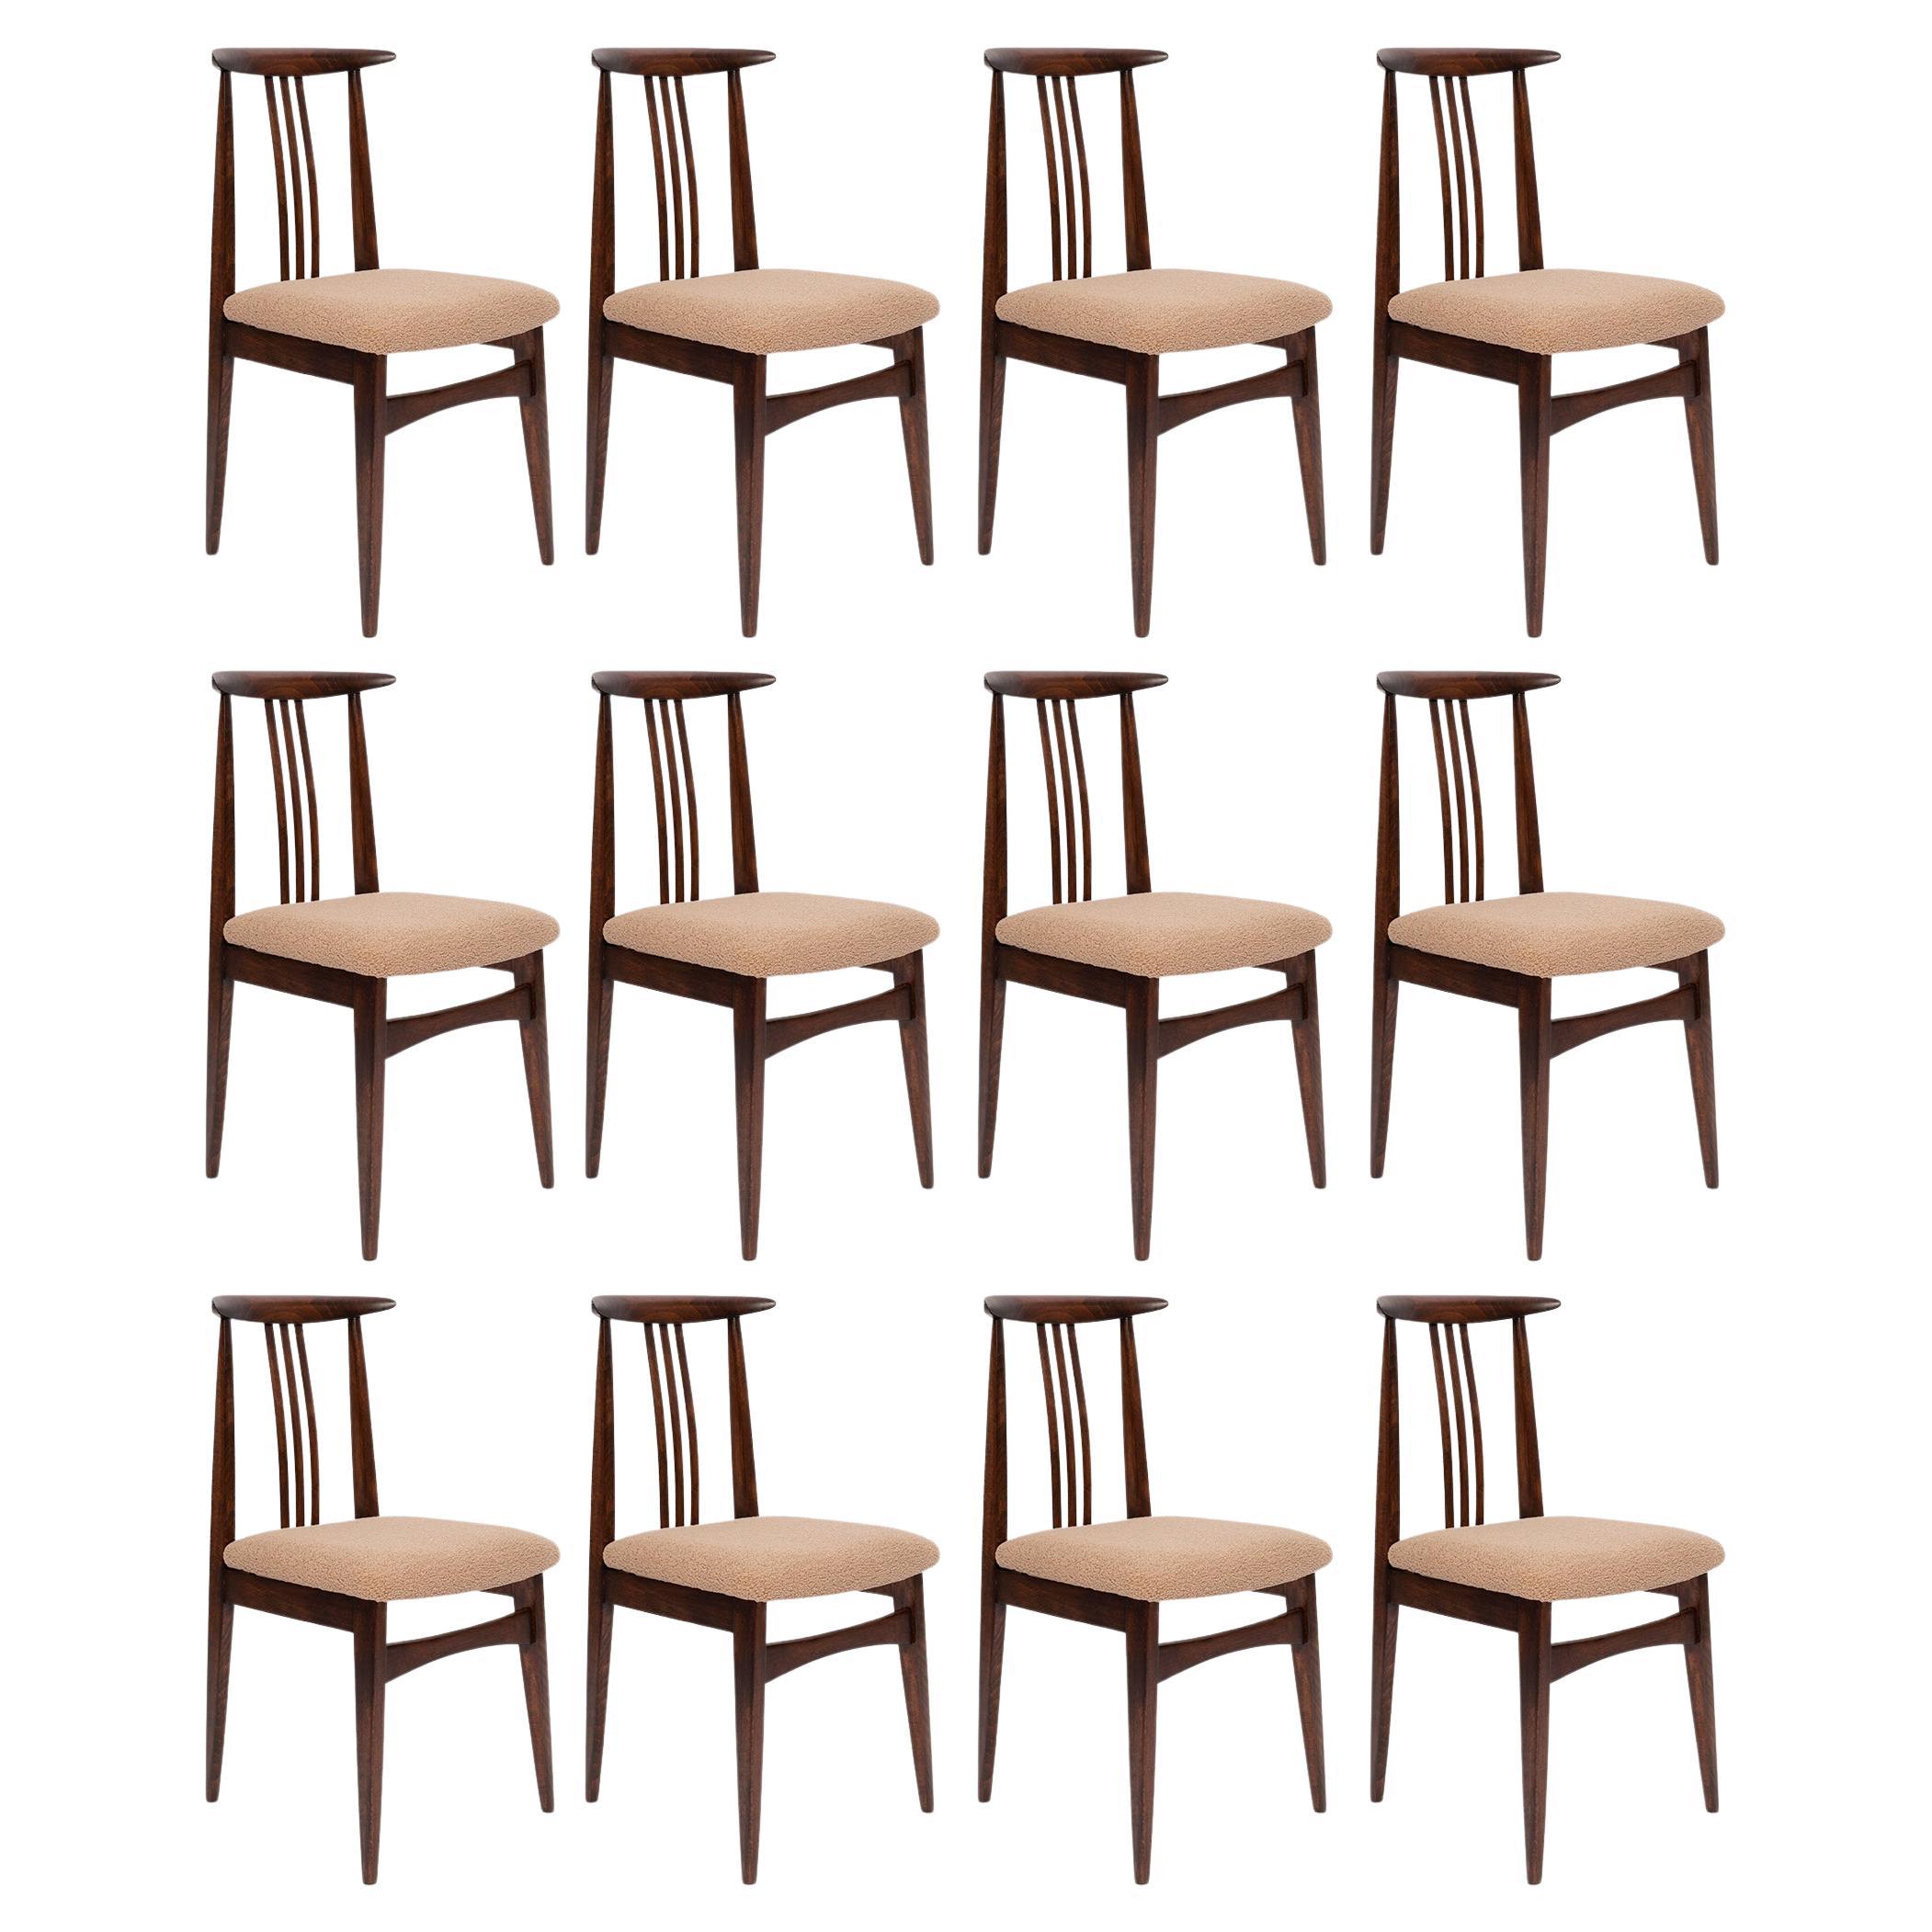 Twelve Mid-Century Latte Boucle Chairs, Walnut Wood, M. Zielinski, Europe 1960s